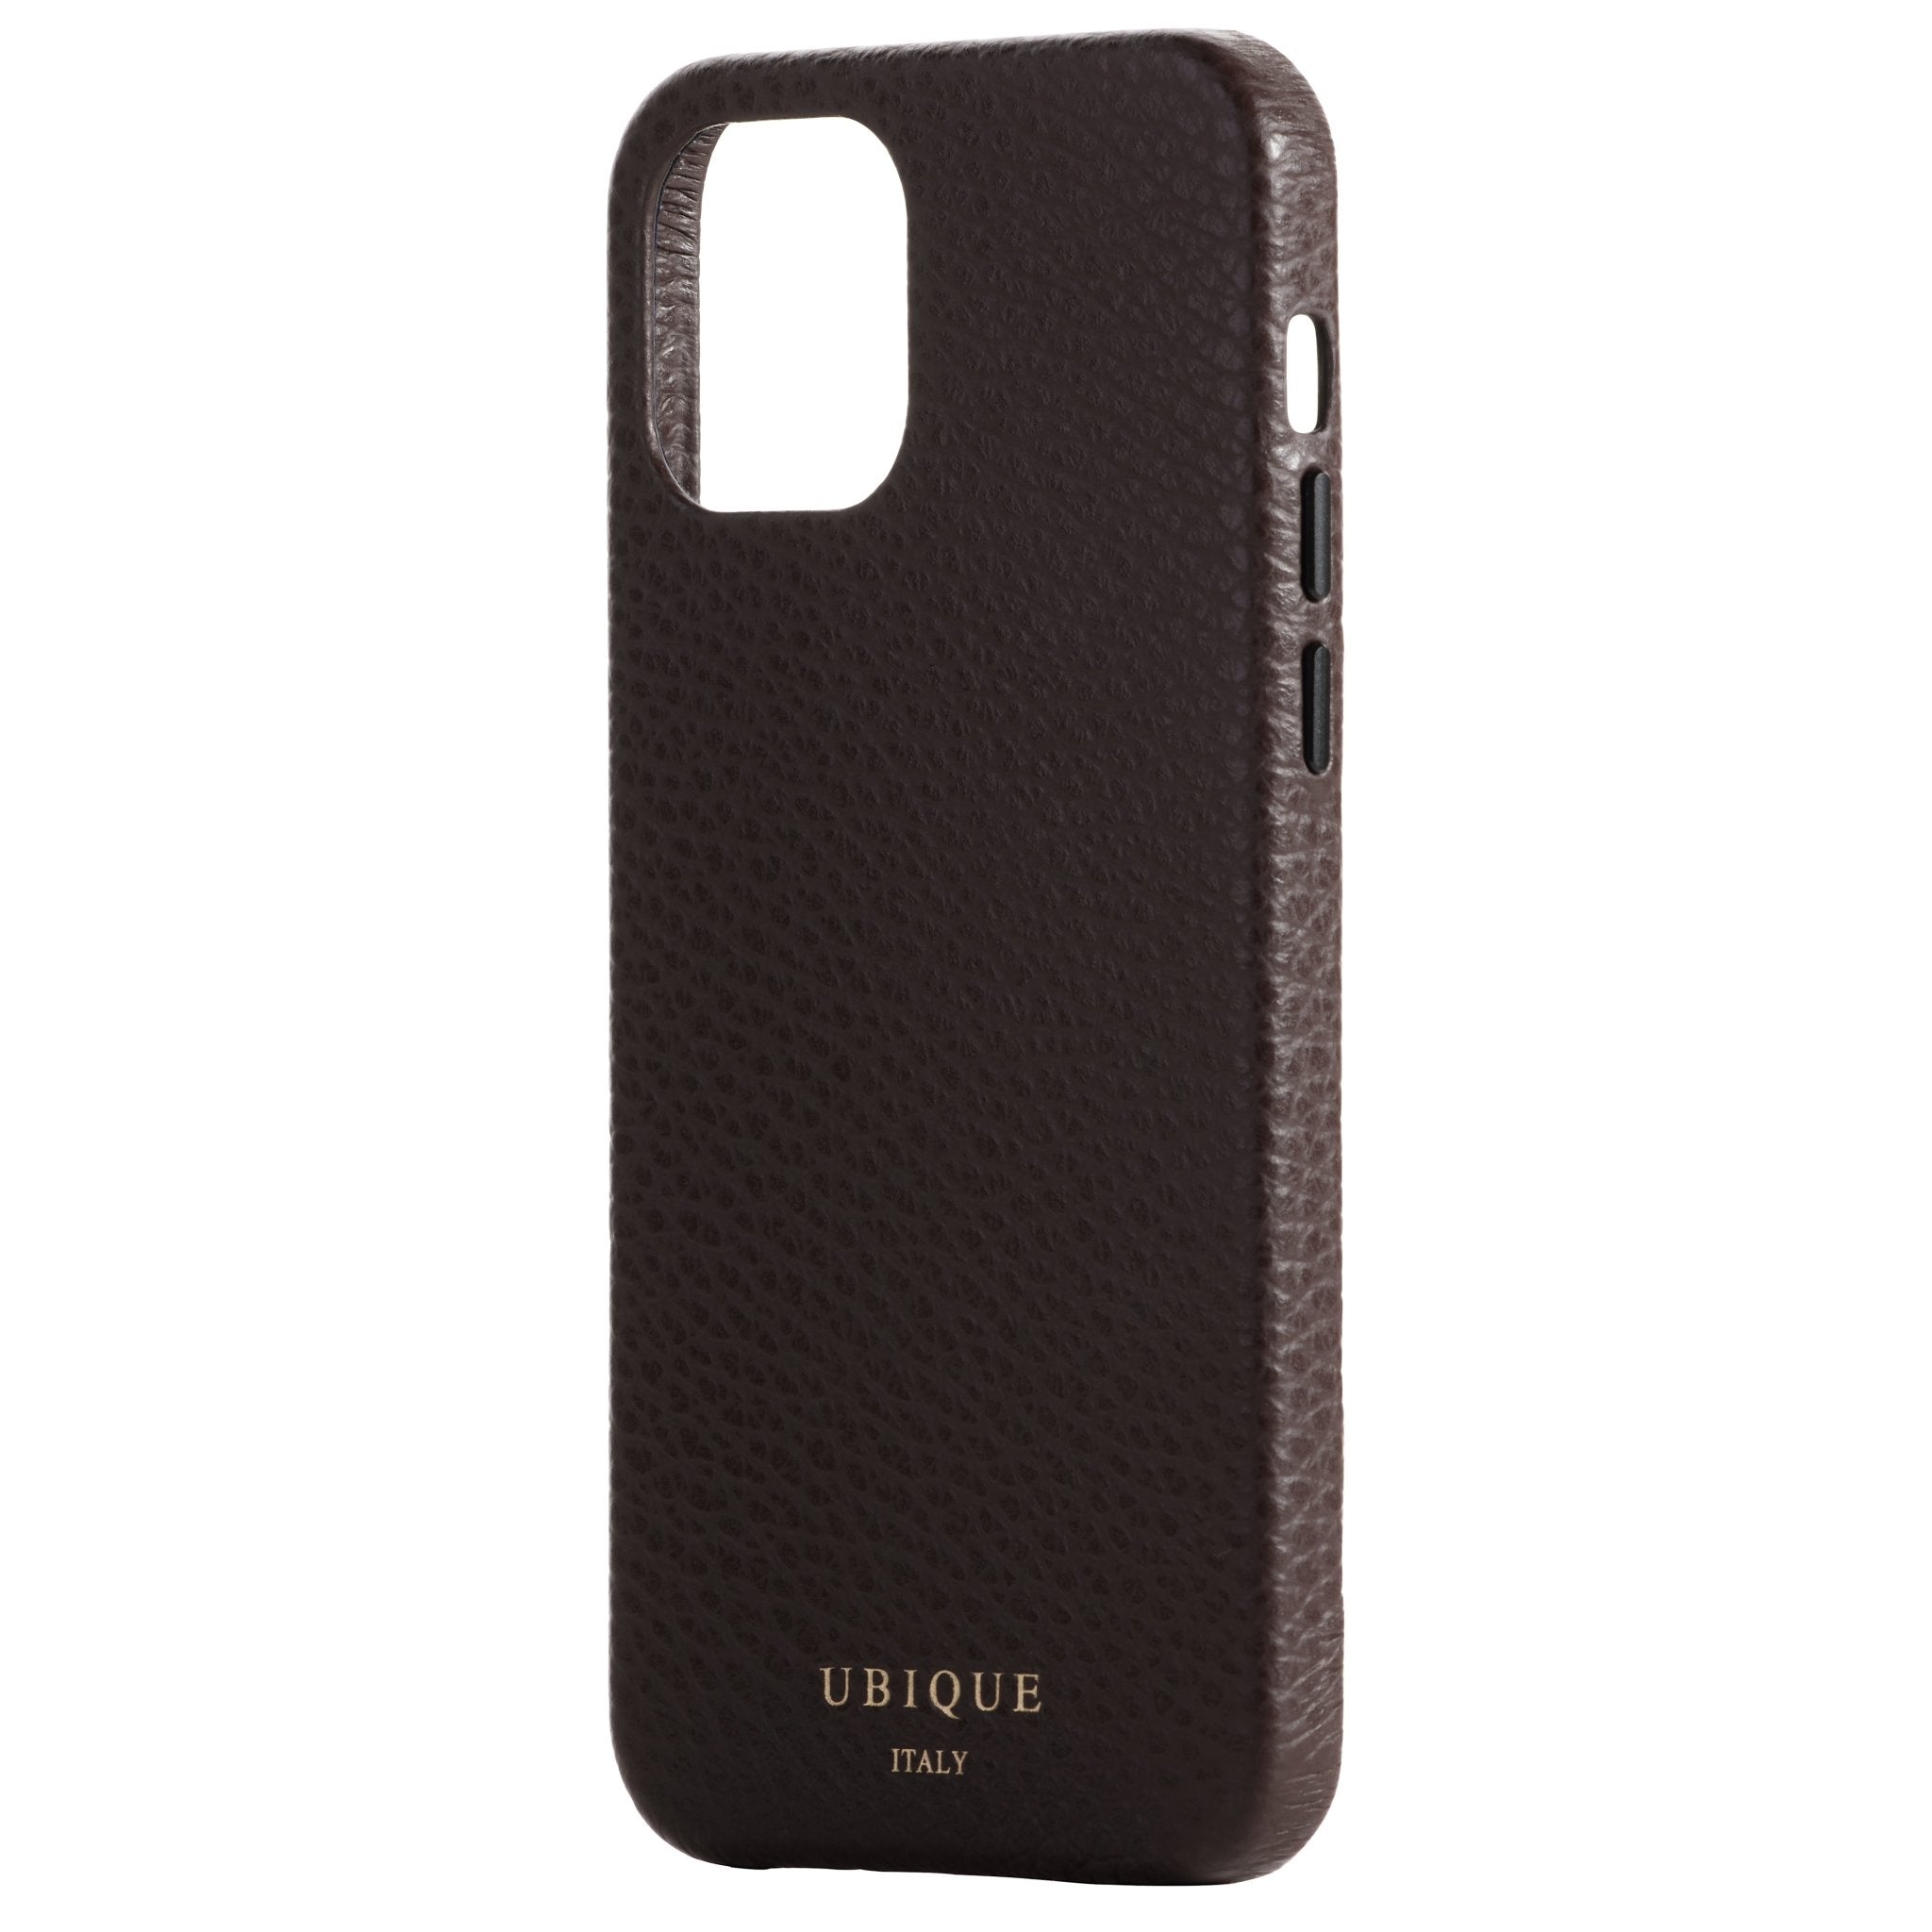 Ubique Italy Luxury iPhone Case 12 Pro Pebble Grain Leather Dark Walnut Angled